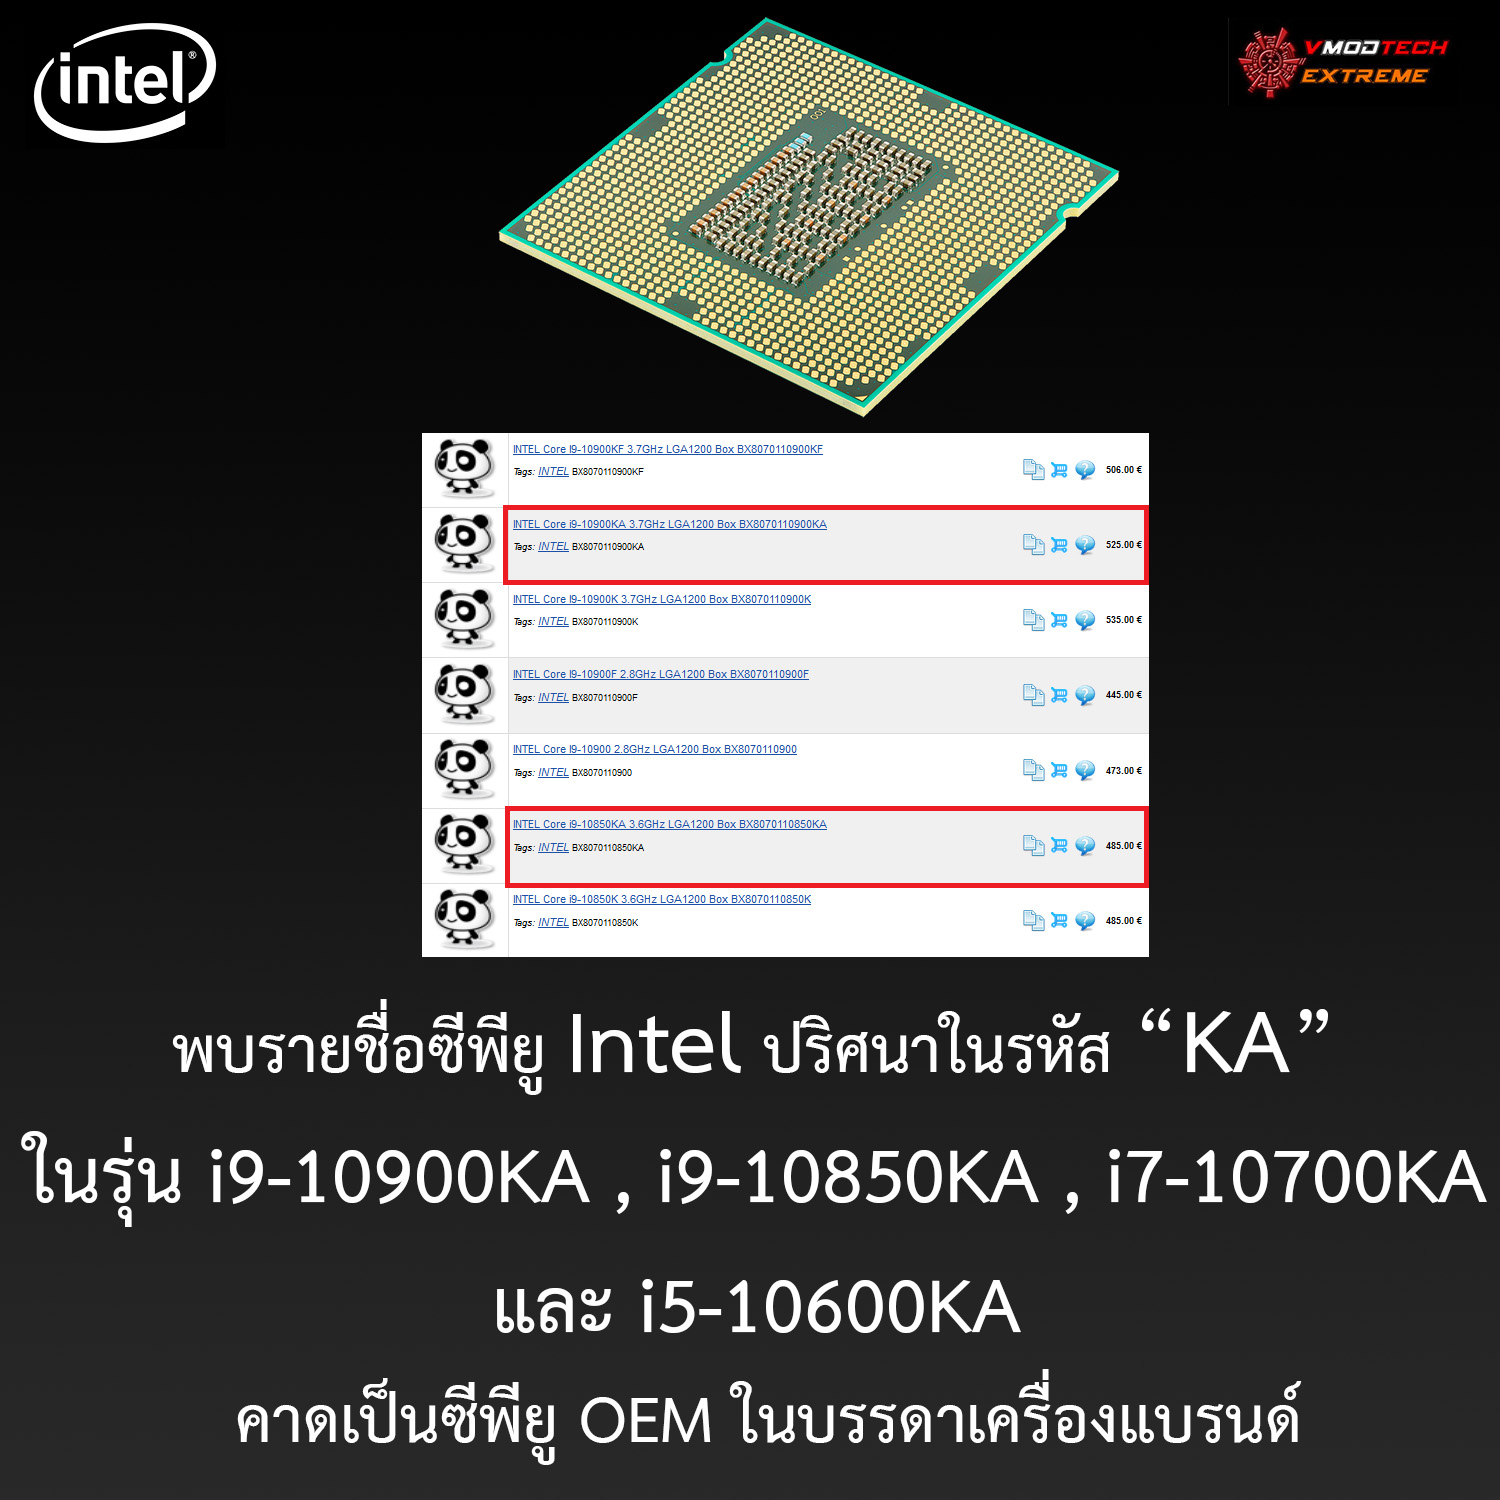 intel ka cpu พบรายชื่อซีพียู Intel ปริศนาในรหัส KA ในรุ่น i9 10900KA, i9 10850KA, i7 10700KA และ i5 10600KA 